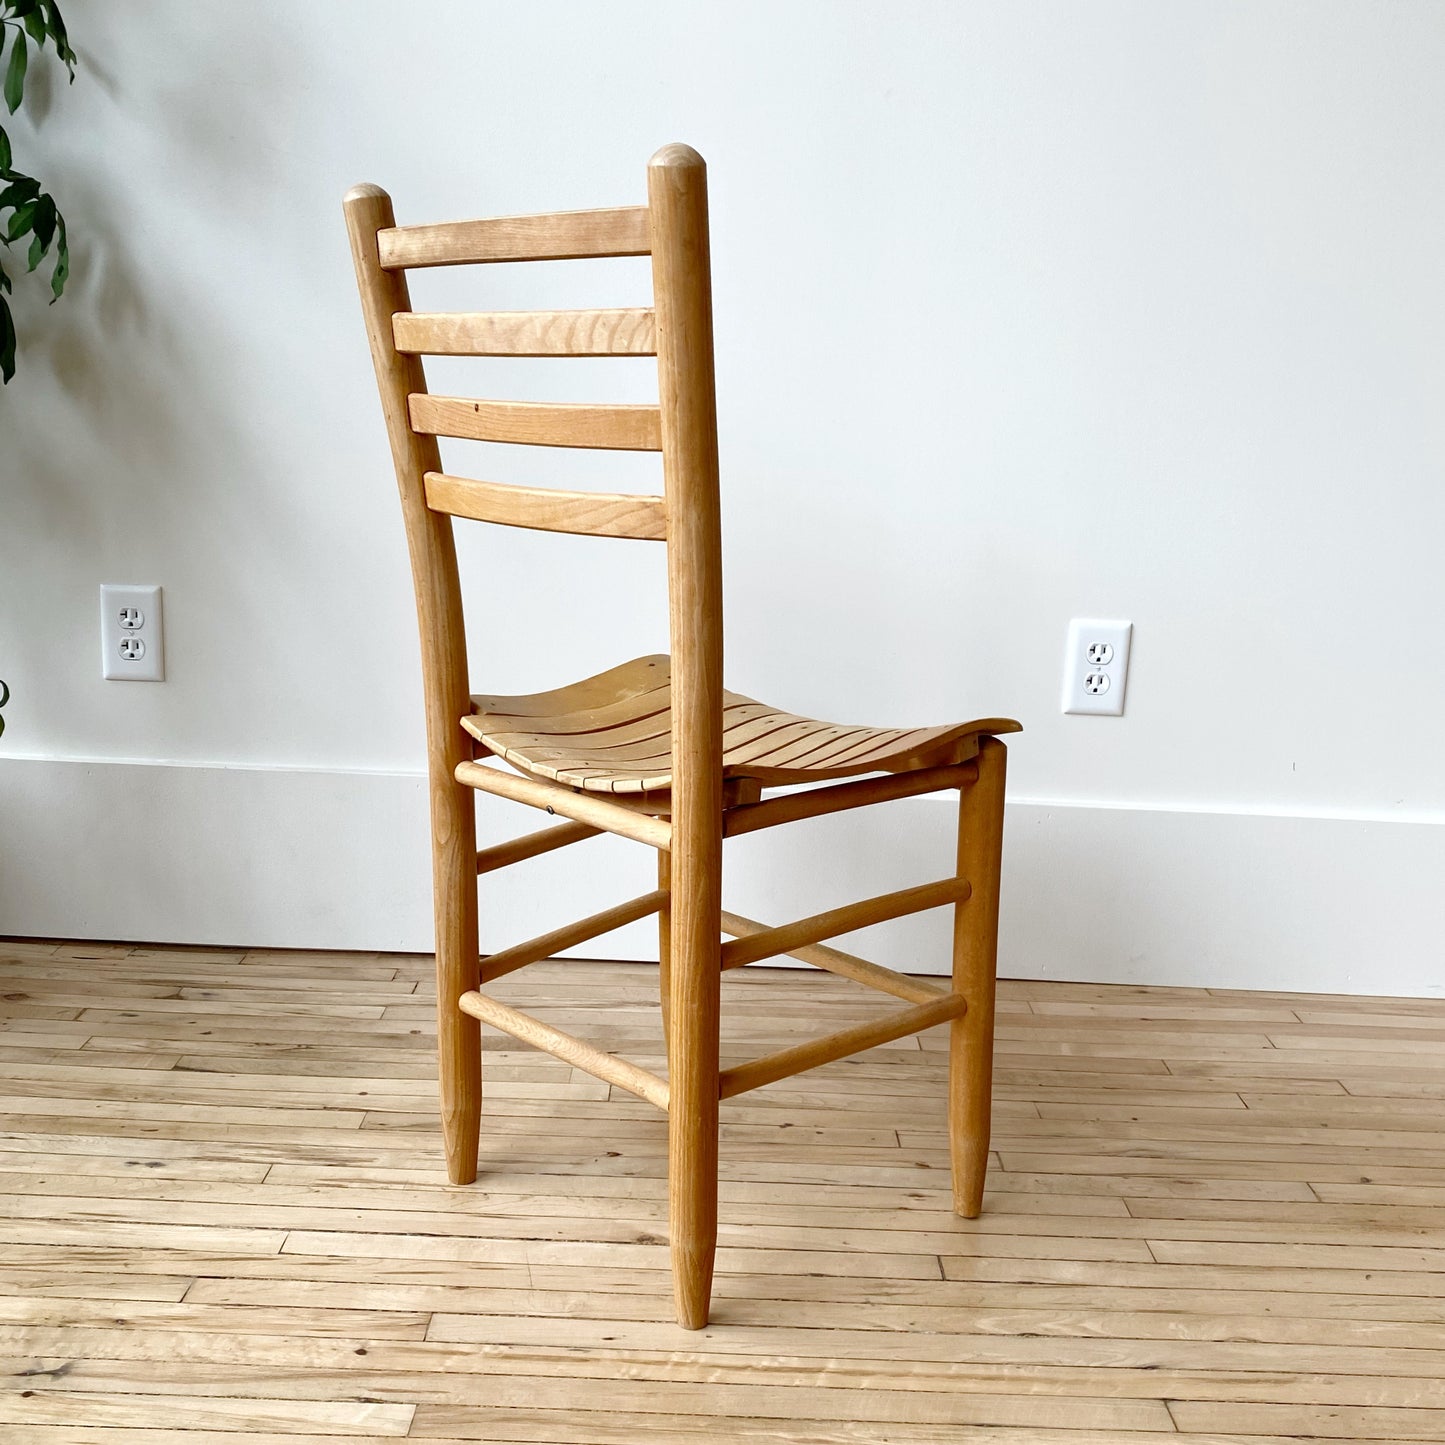 Vintage Wooden Slat Chair